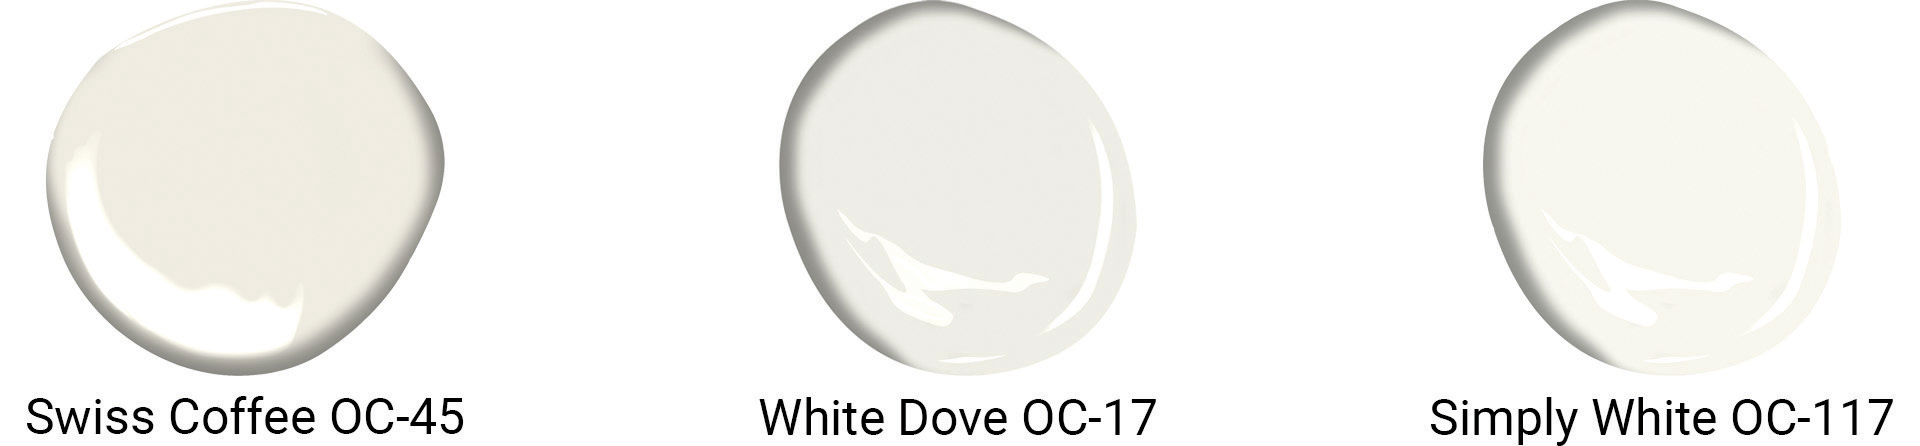 07b-warm-whites.jpg (116 KB)